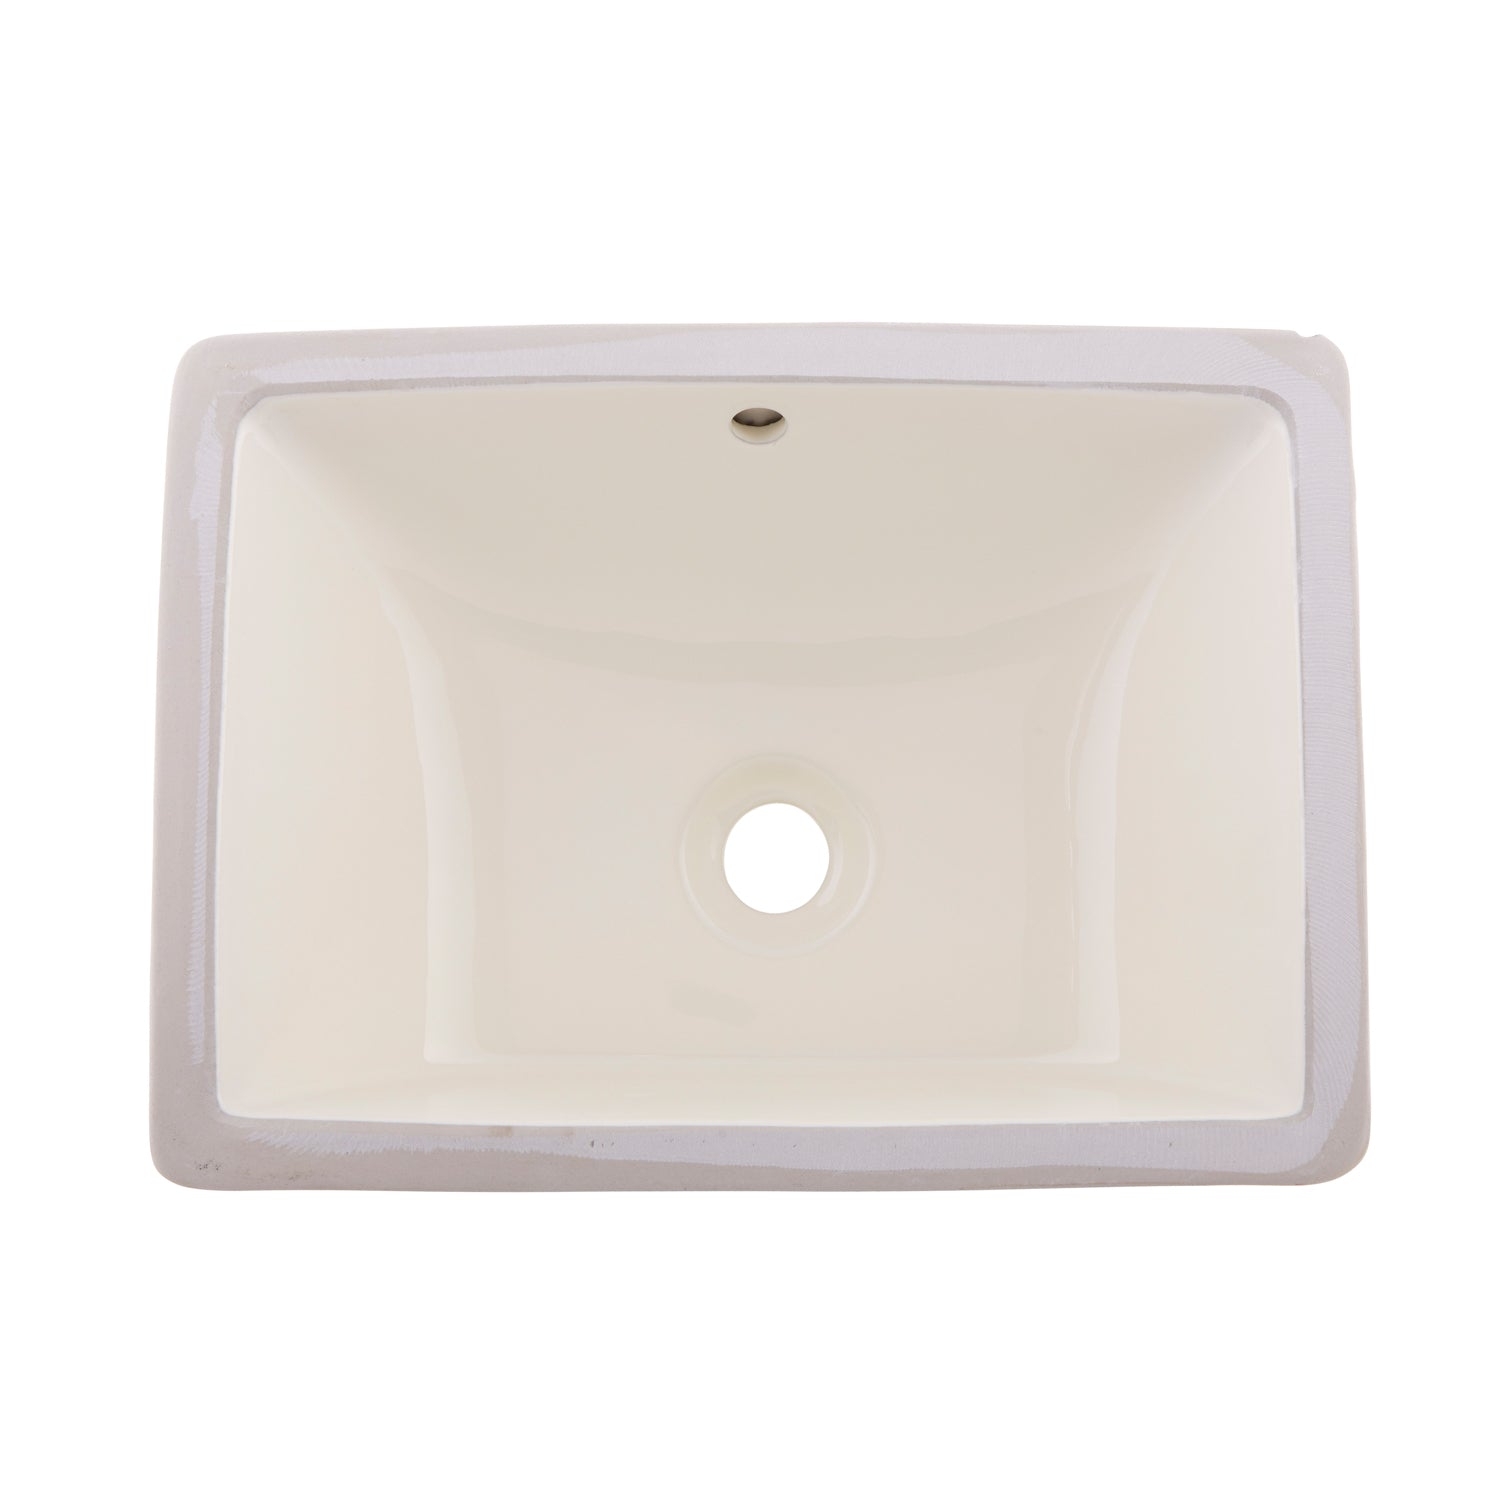 DAX Ceramic Square Single Bowl Undermount Bathroom Sink, Ivory Finish, 18-1/2 x 8-1/16 x 13-9/16 Inches (BSN-202C-I)